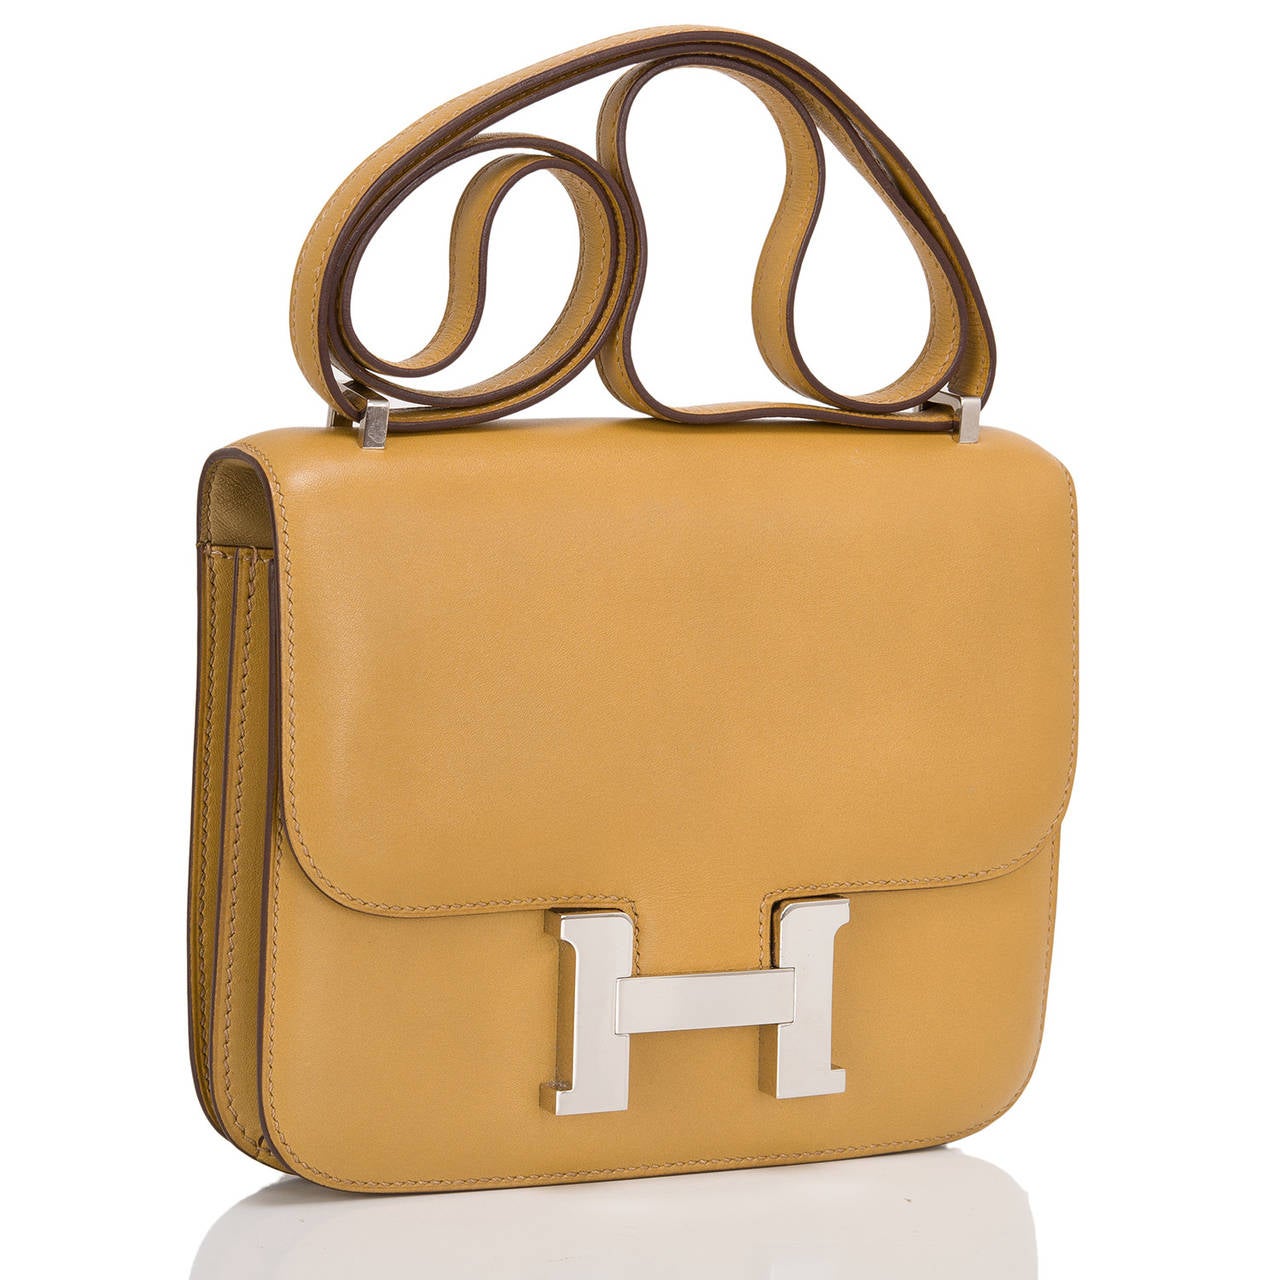 Hermes constant bag 18cm 24cm stewardess bag